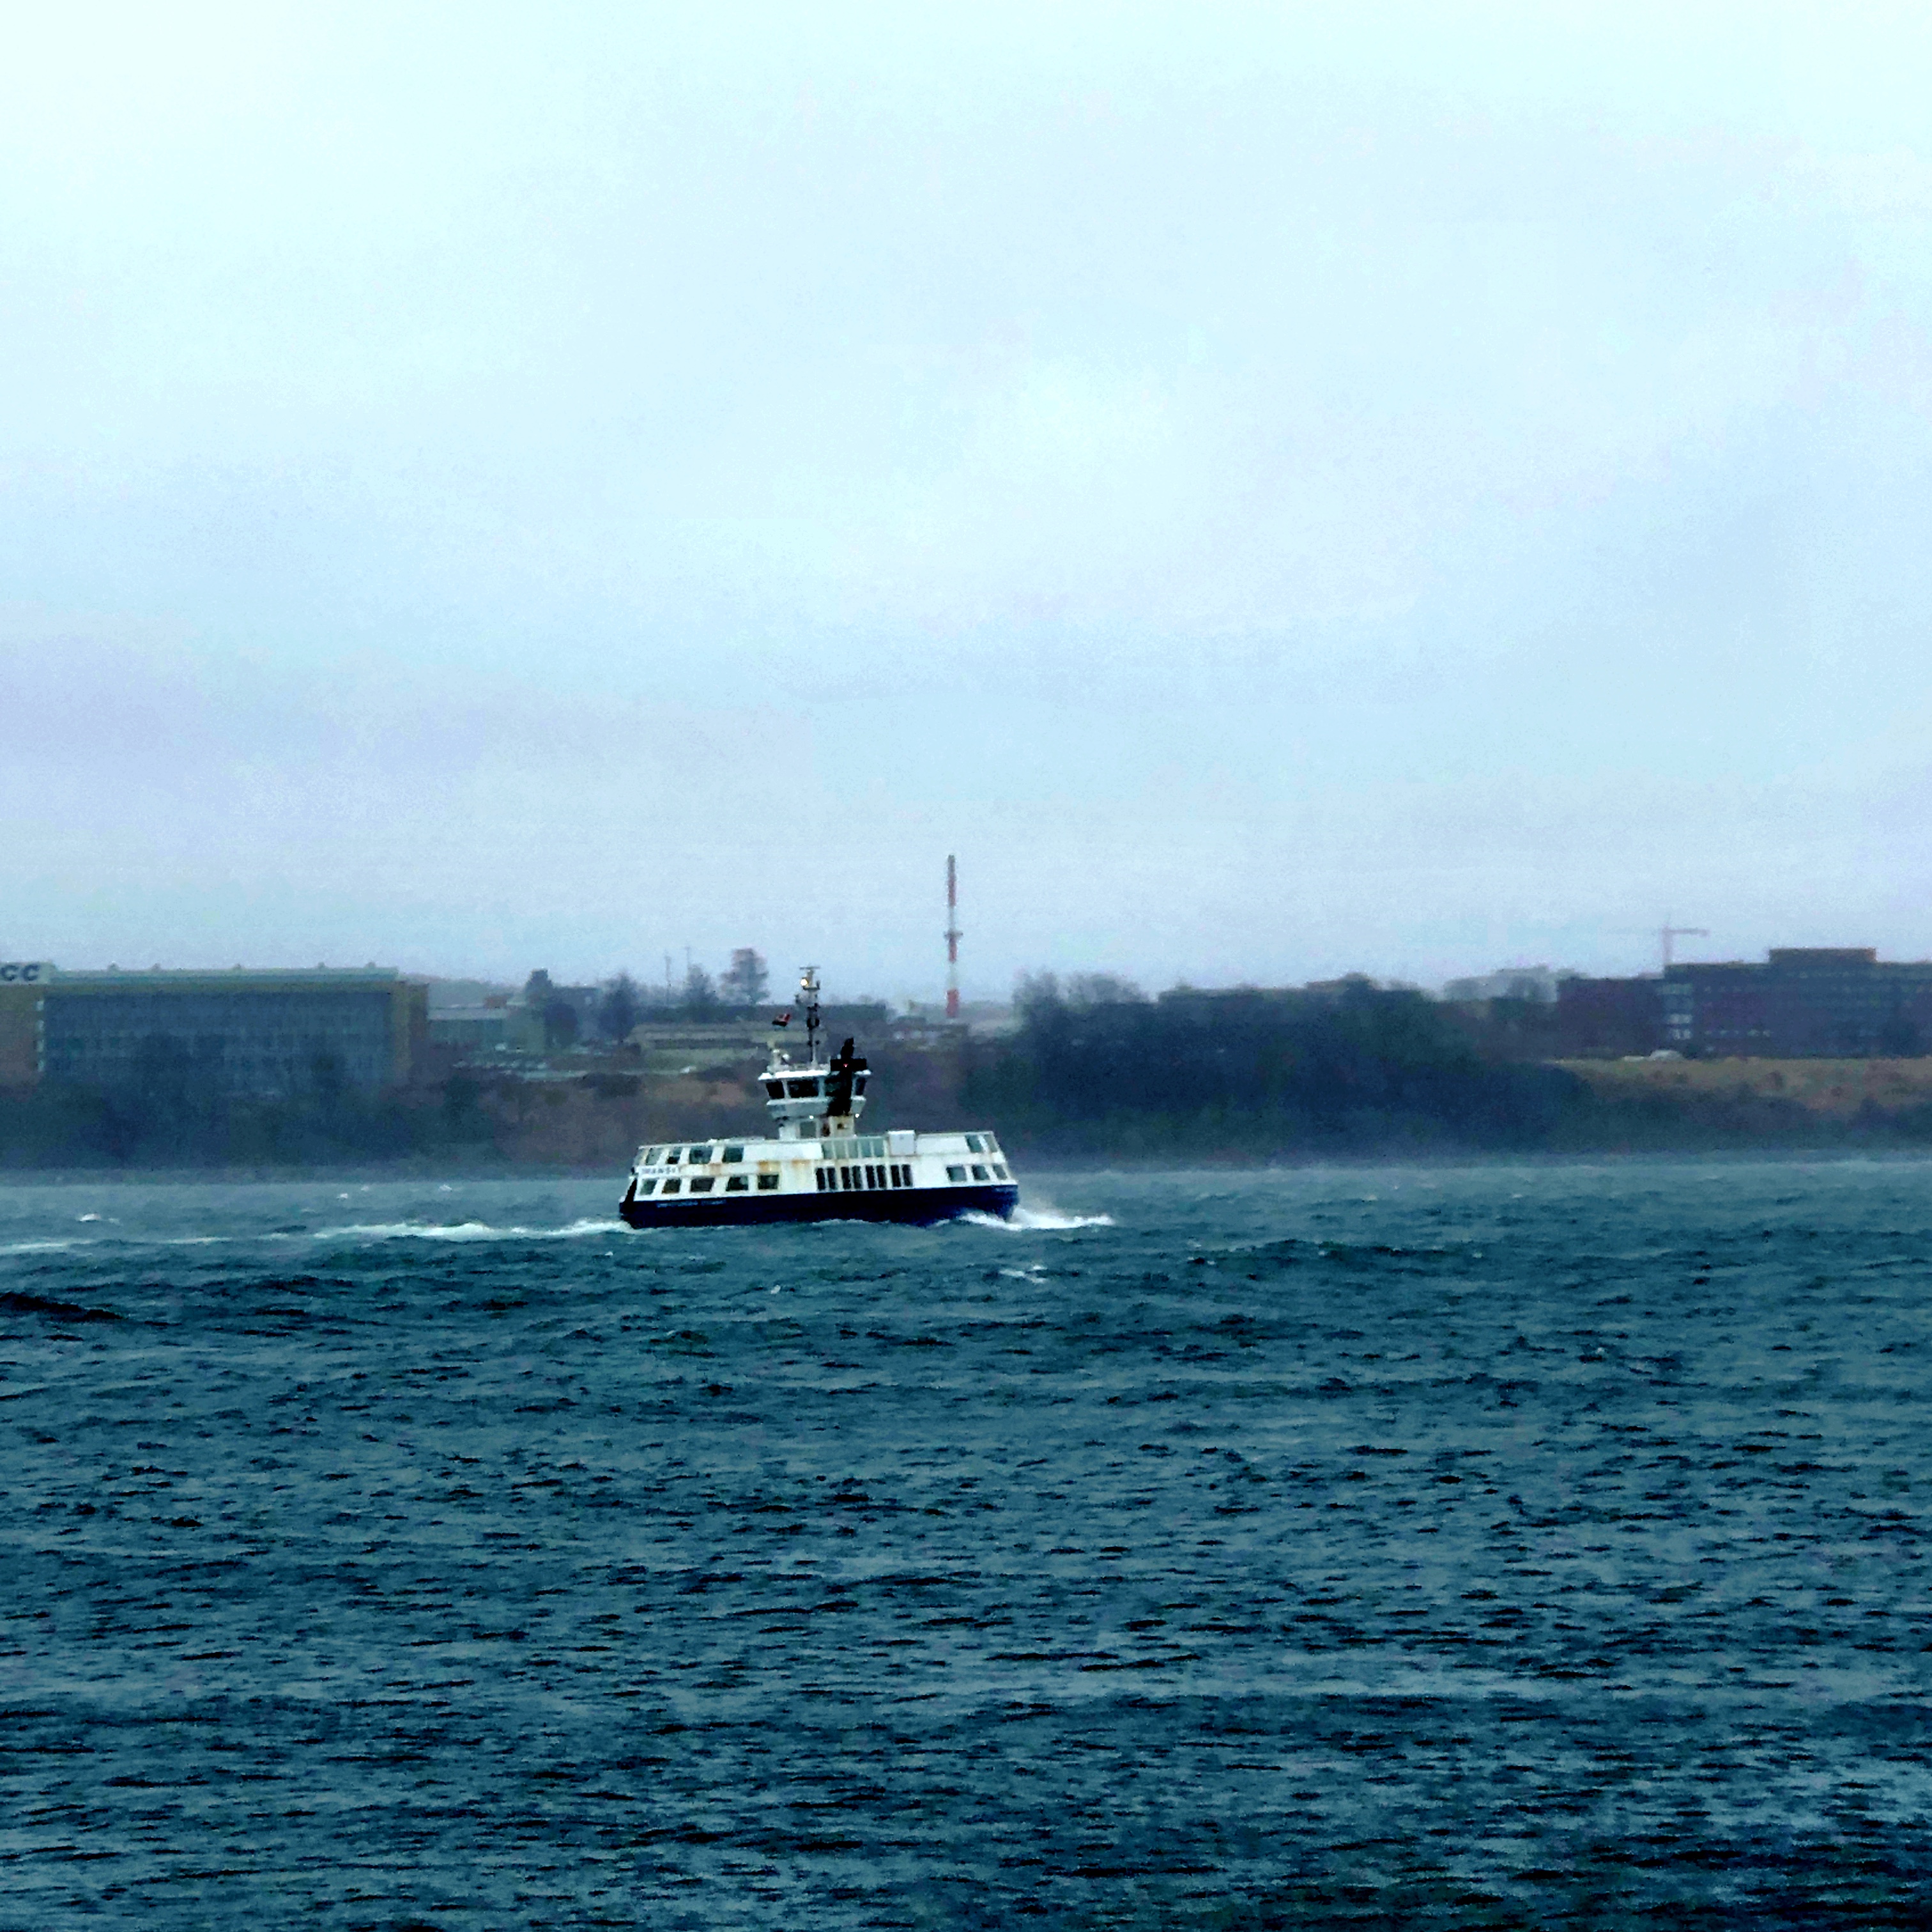 Feb 18, 2022 - Ferry through the storm 